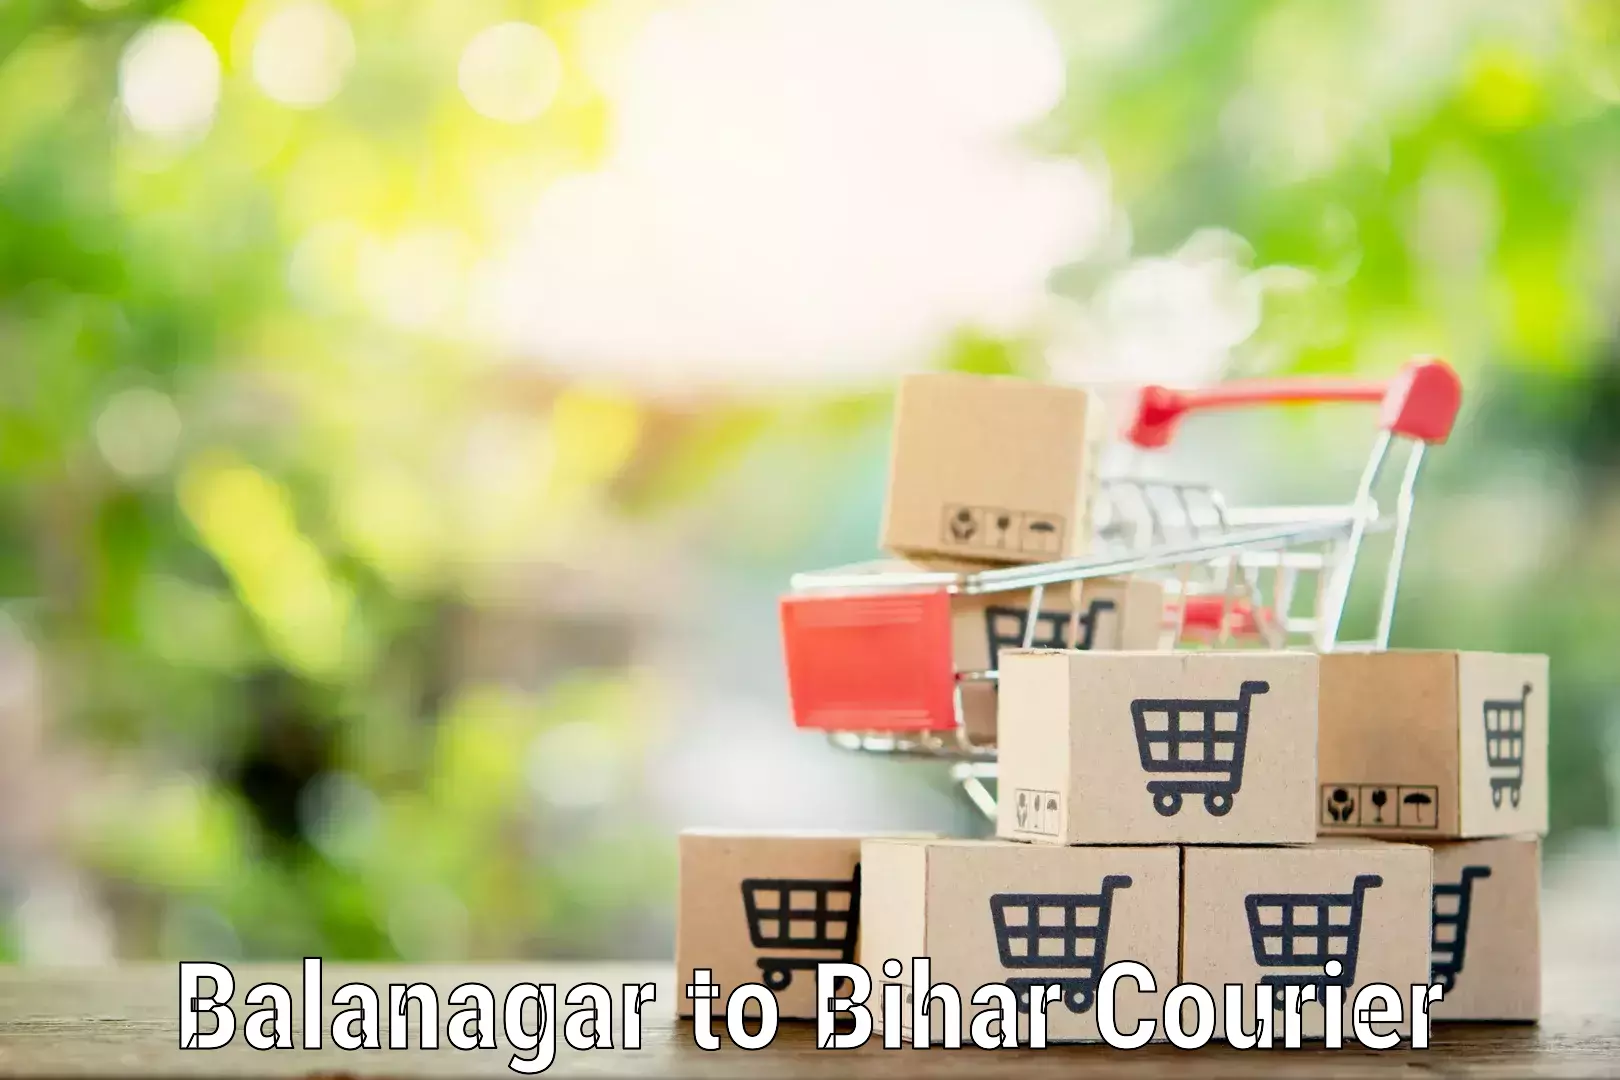 Professional moving company in Balanagar to Biraul